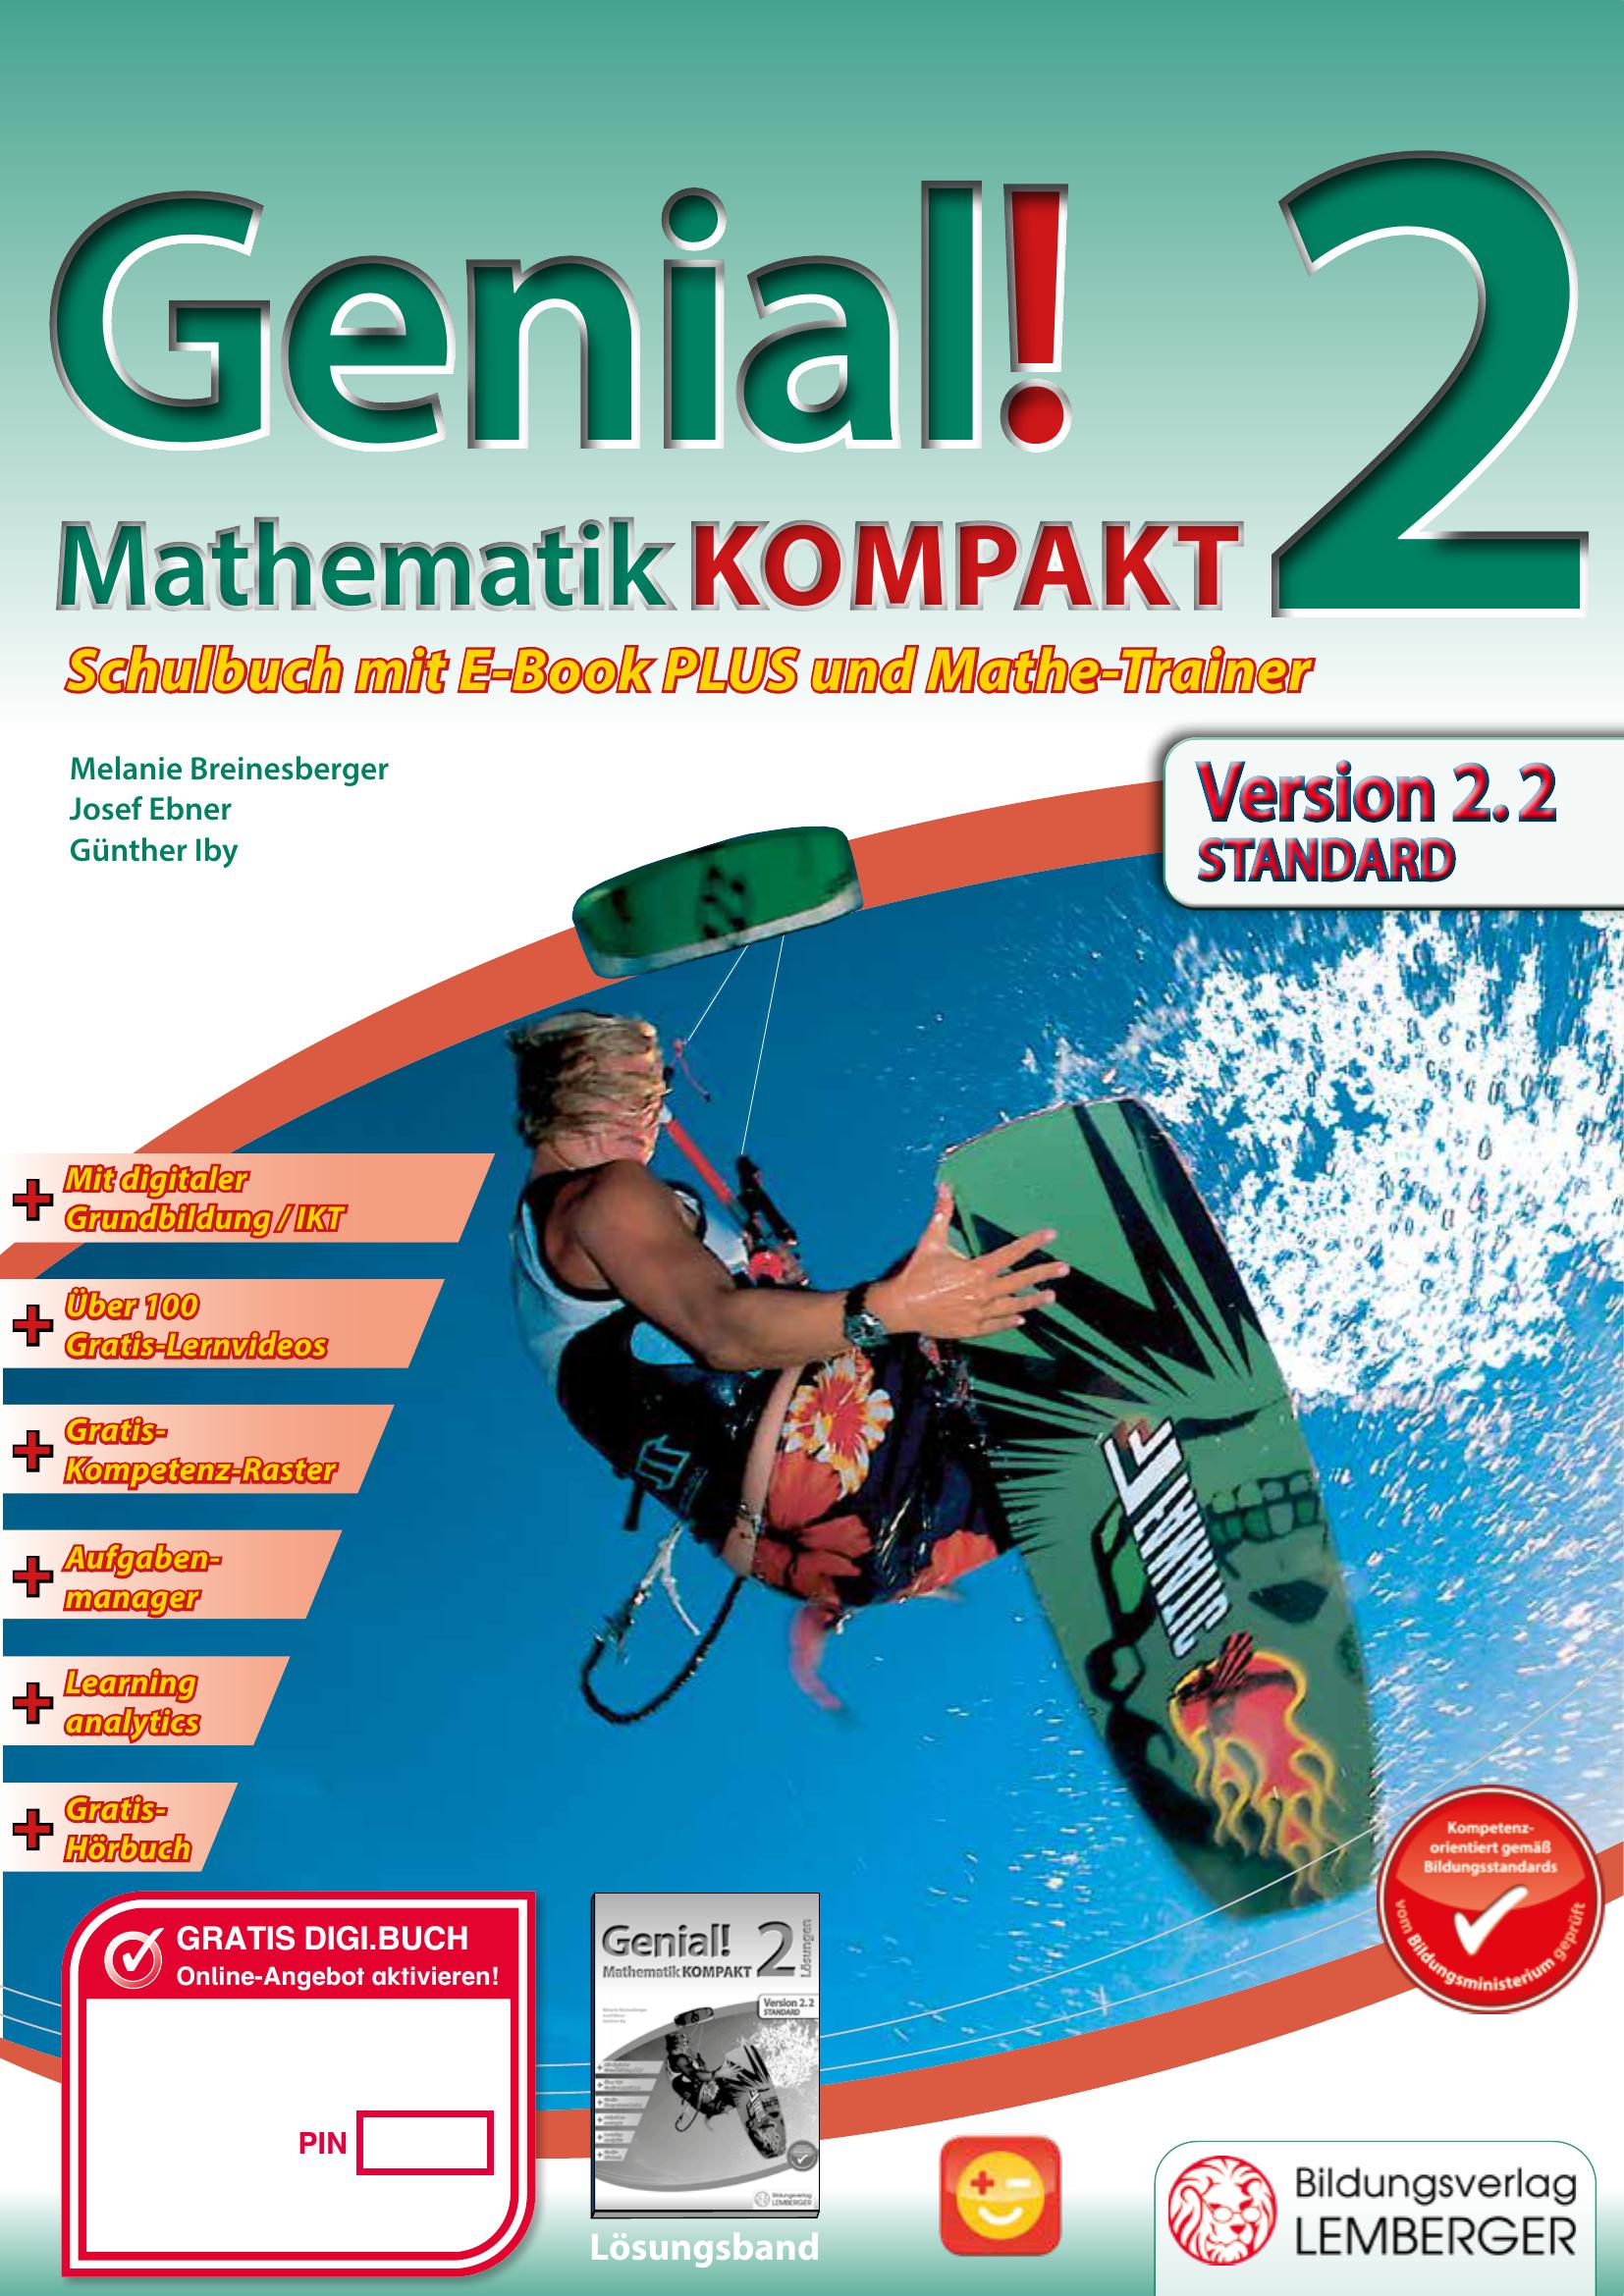 Genial! Mathematik Kompakt 2 IKT v2.2 PLUS-Lizenz mit Genial! Mathe-Trainer